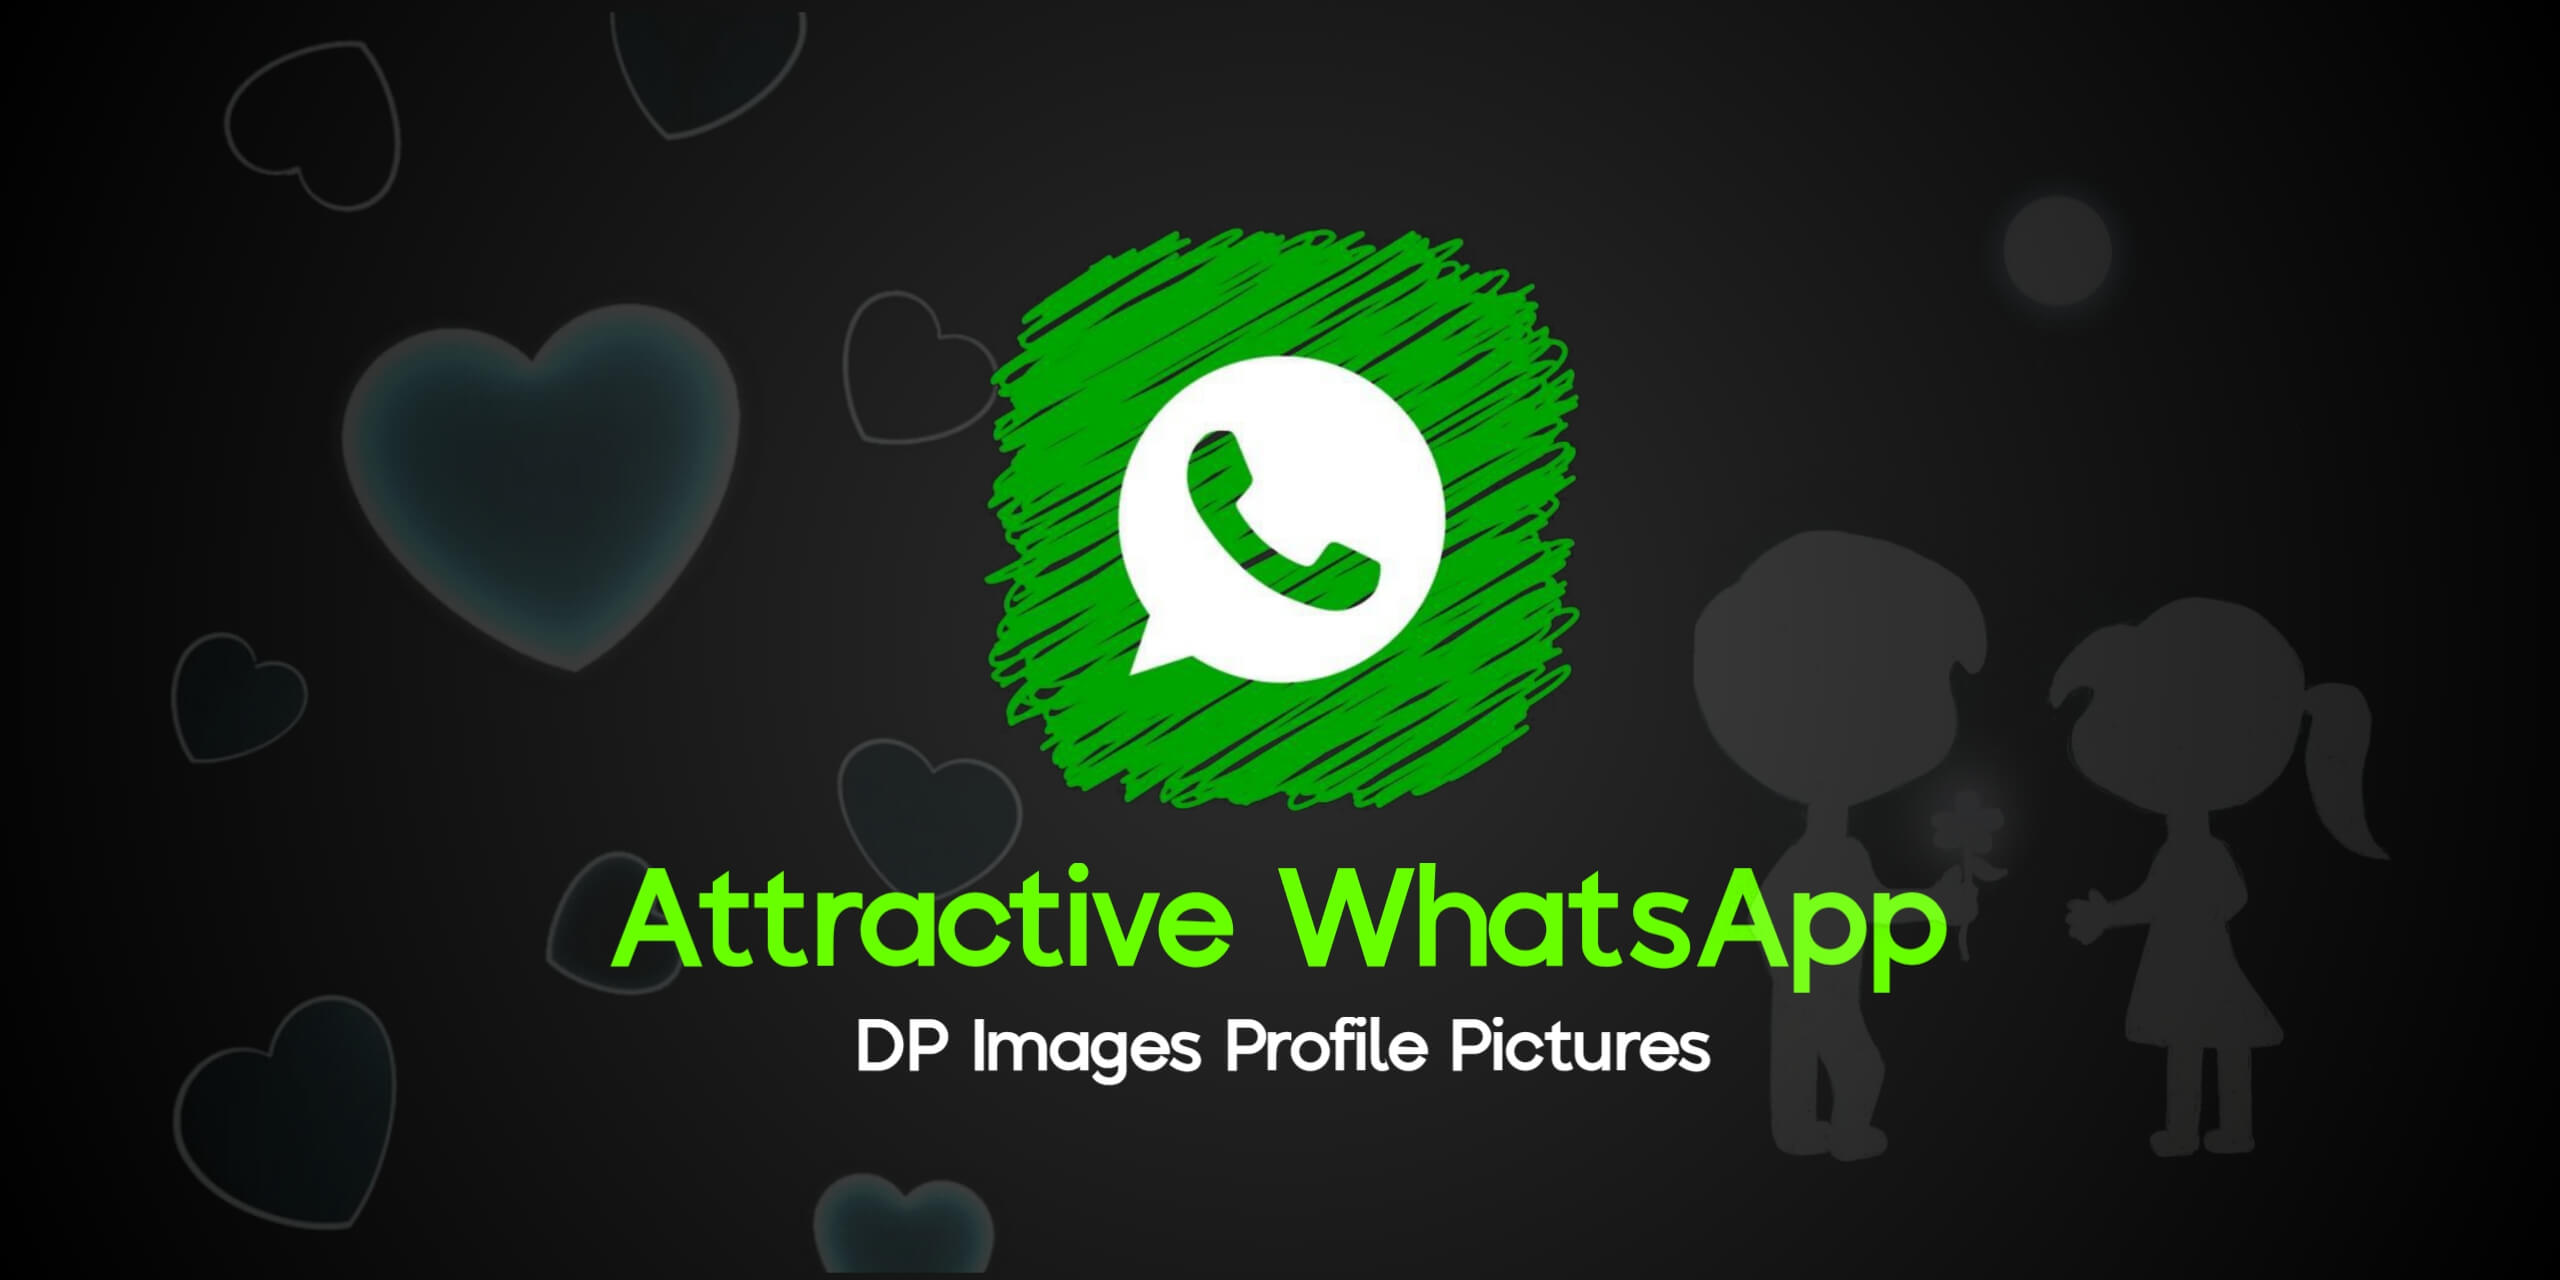 Attractive WhatsApp DP